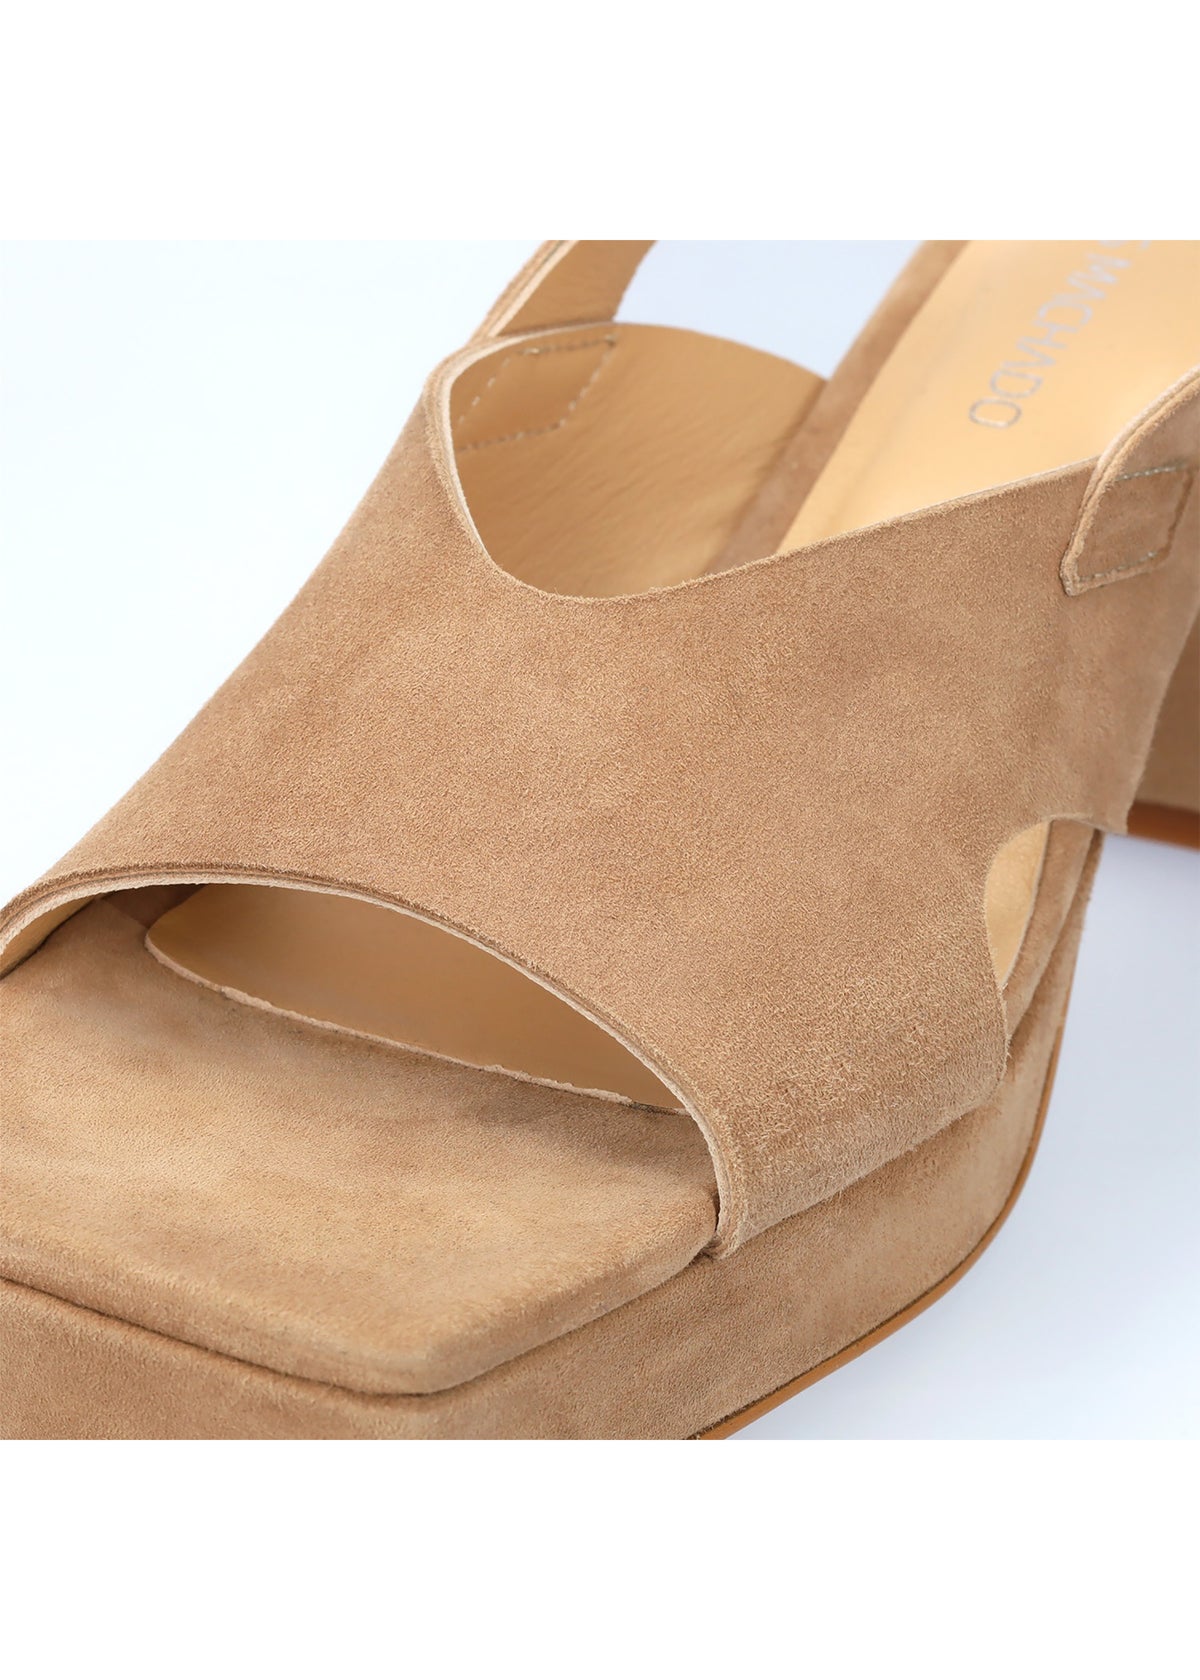 Sandals with stiletto heel and platform sole - Rita, beige nubuck leather